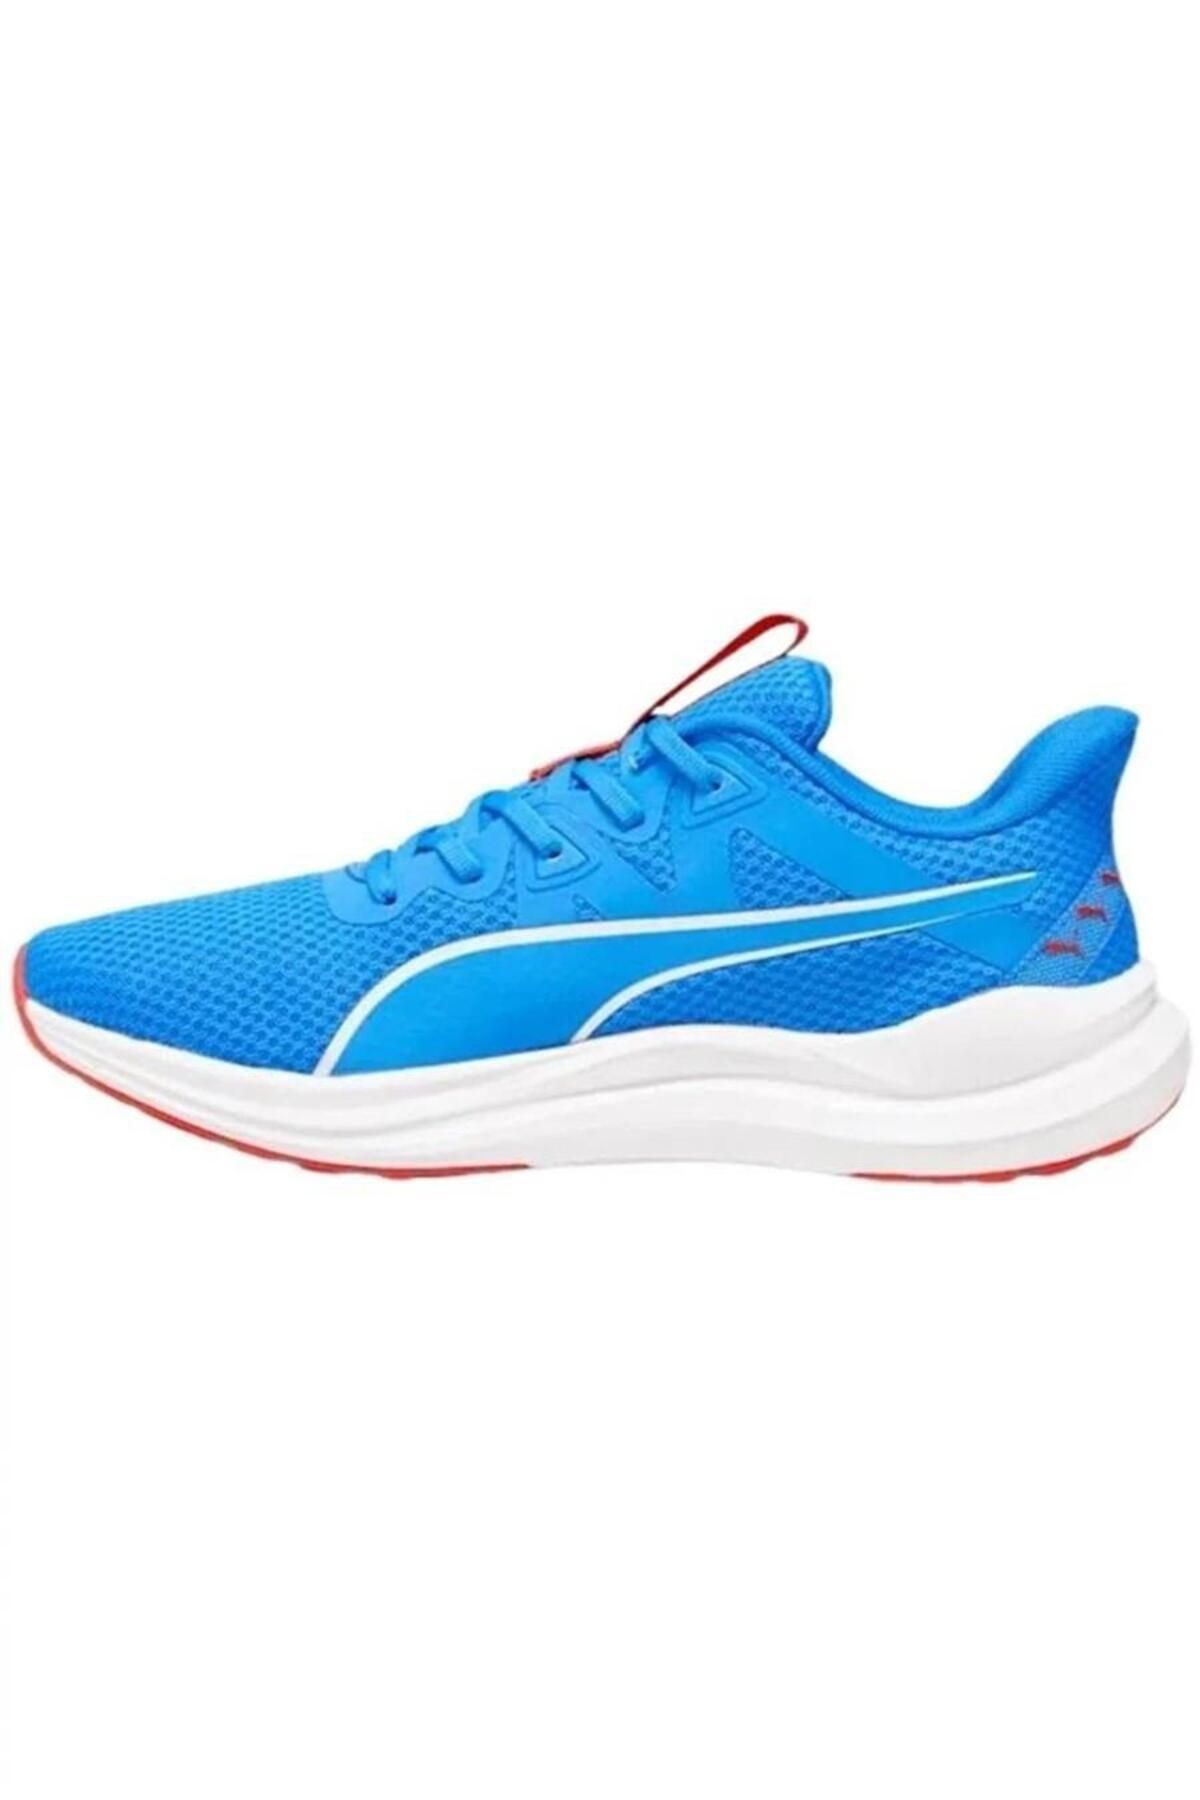 Puma 378768 03 Reflect Lıte Ultra Blue- White-for A Ll Tıme Red Yetişkin Erkek Koşu Ayakkabısı